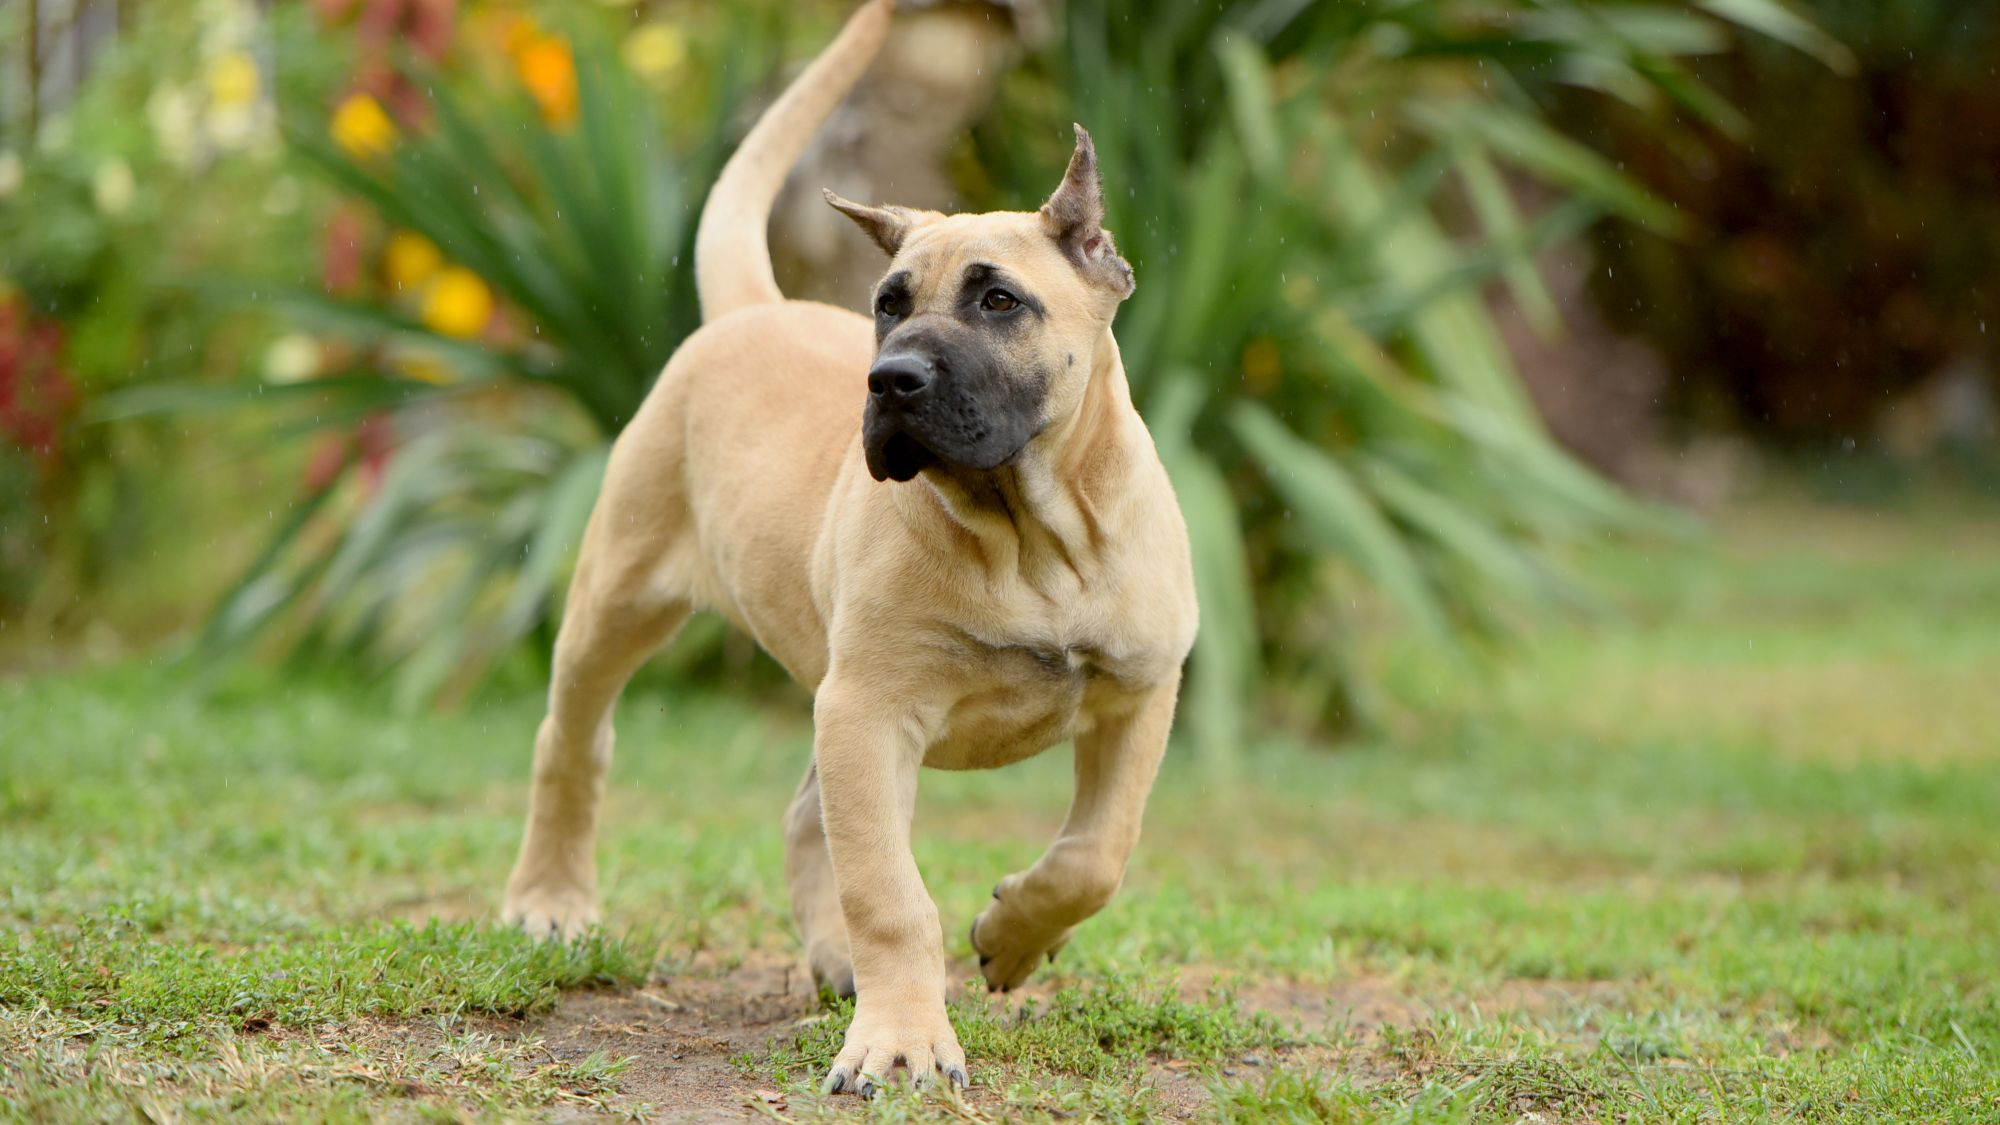 Dogo Canario preparing to jump